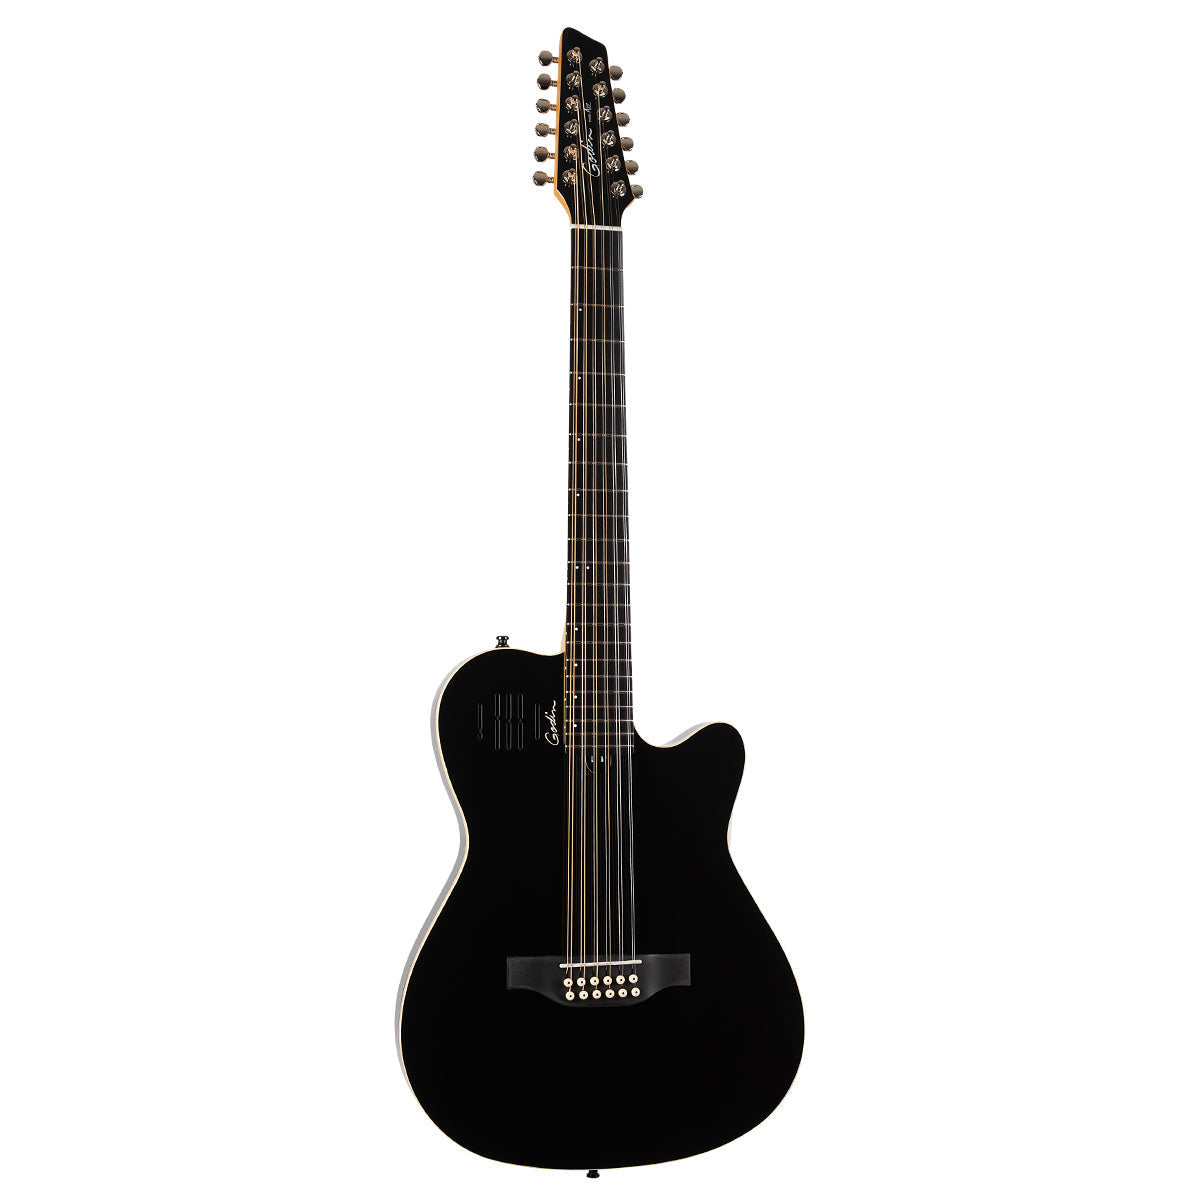 Godin A12 12 String Electric Guitar ~ Black HG, Electric Guitar for sale at Richards Guitars.